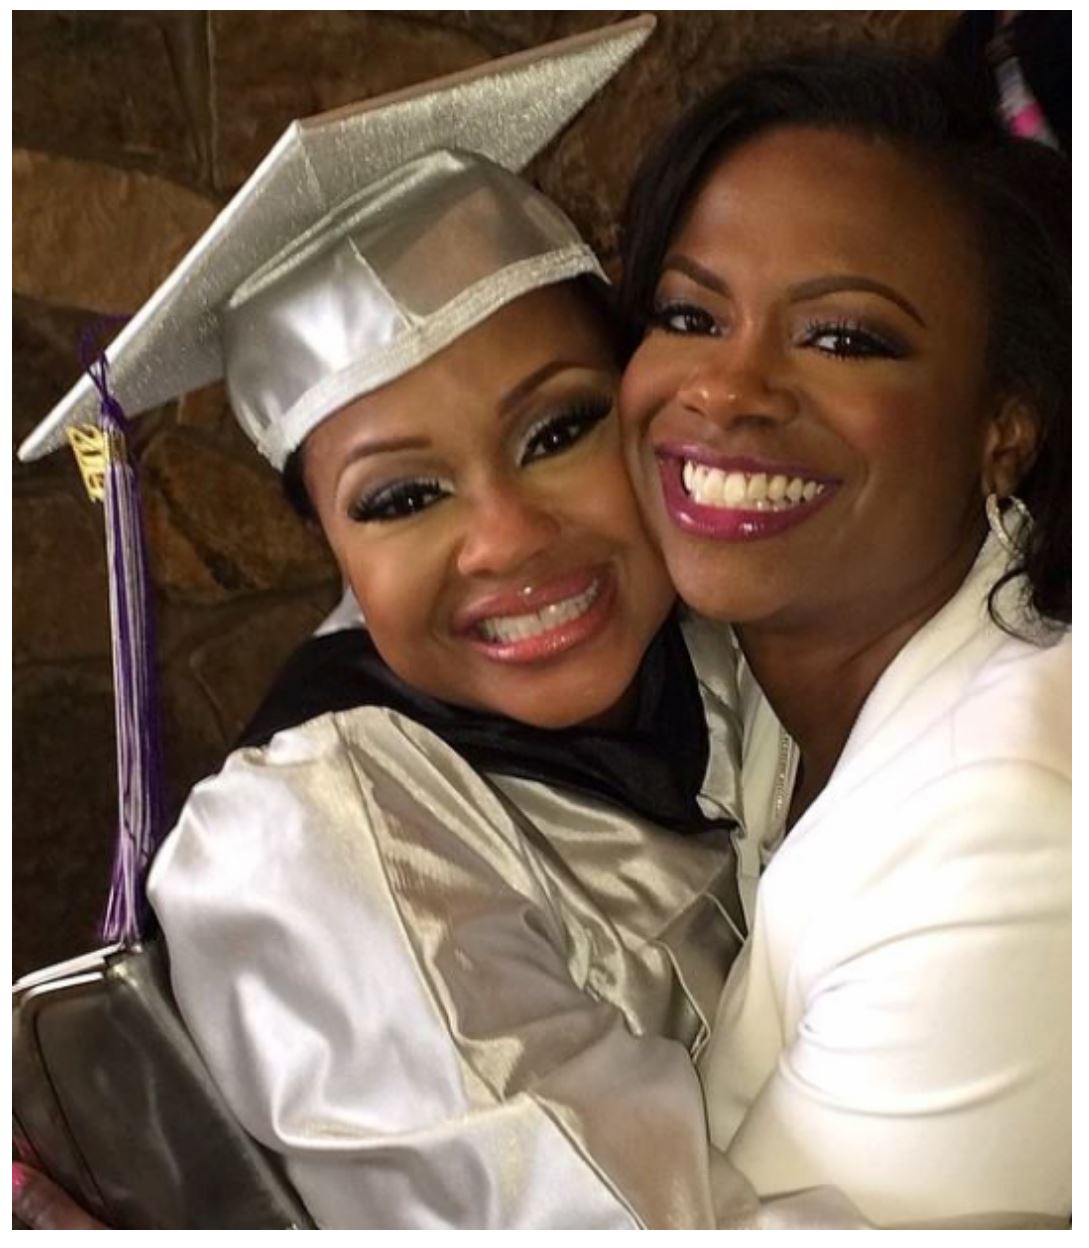 Phaedra and Friend at 2014 graduation